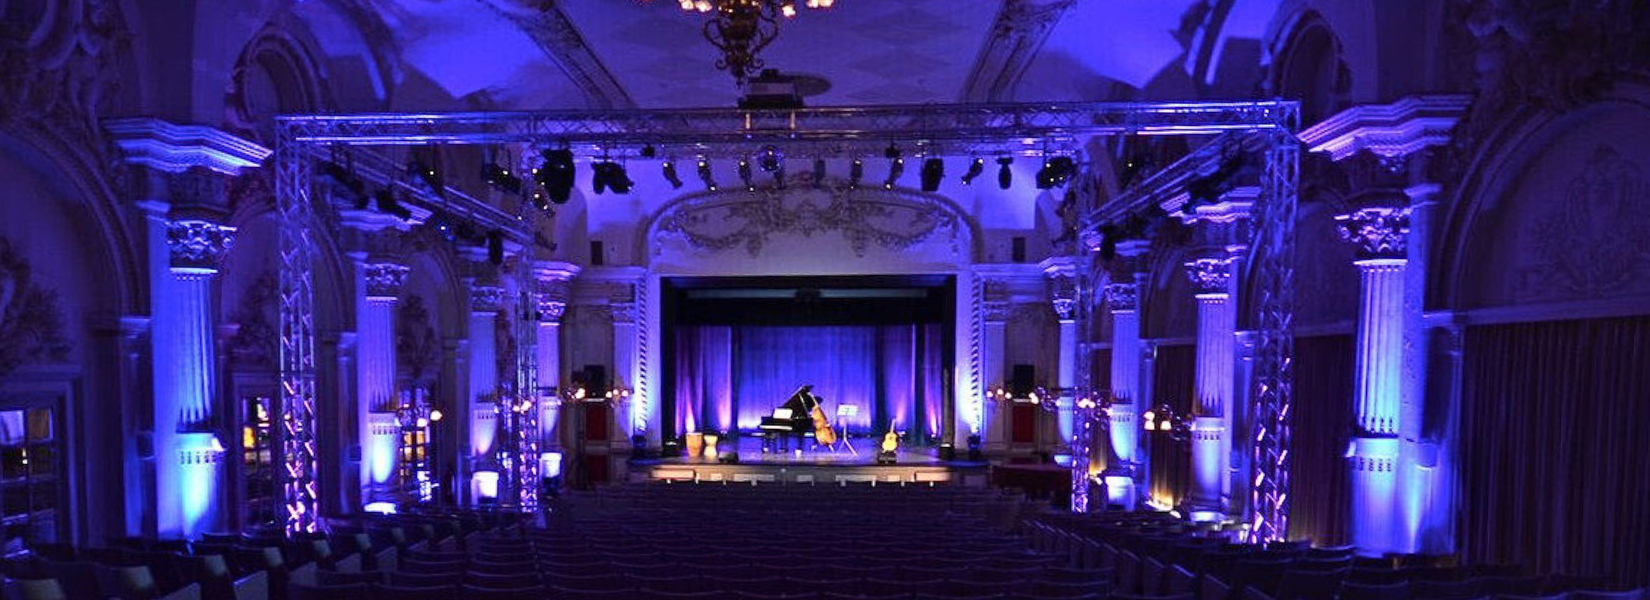 Caux Palace theatre blue light piano & cello